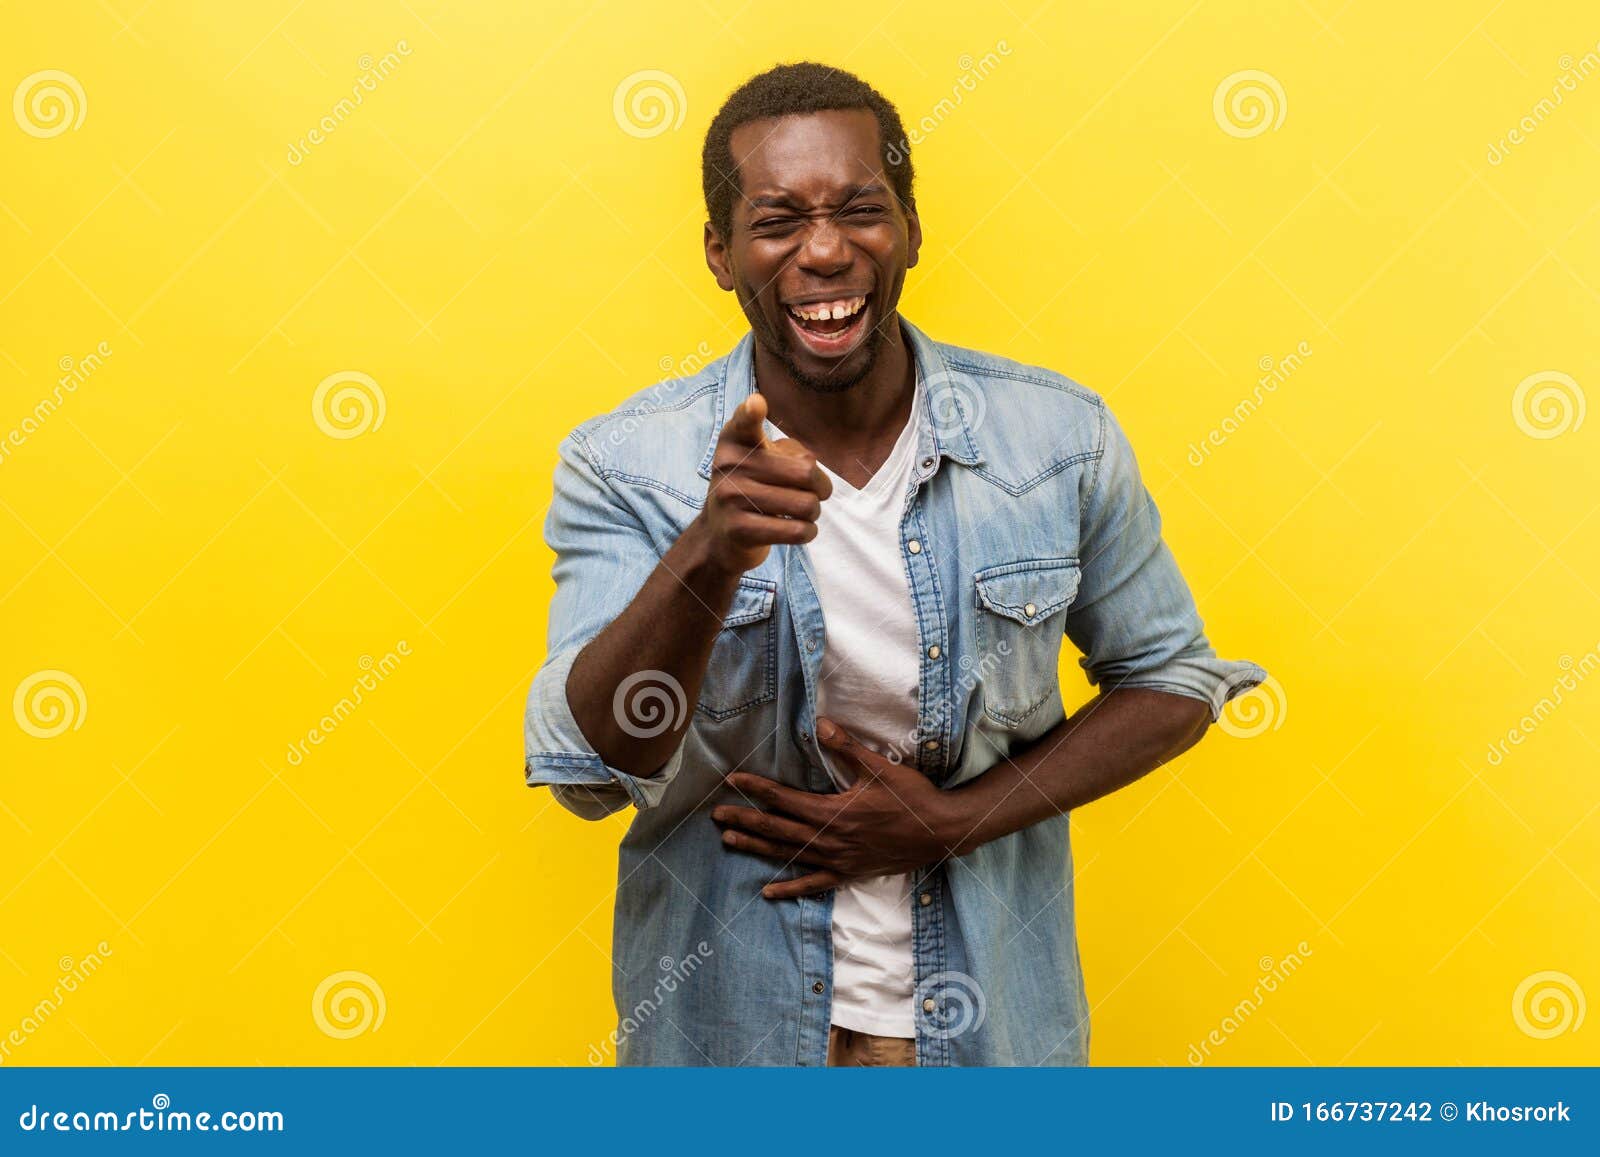 portrait of joyful positive man laughing out loud. indoor studio shot  on yellow background